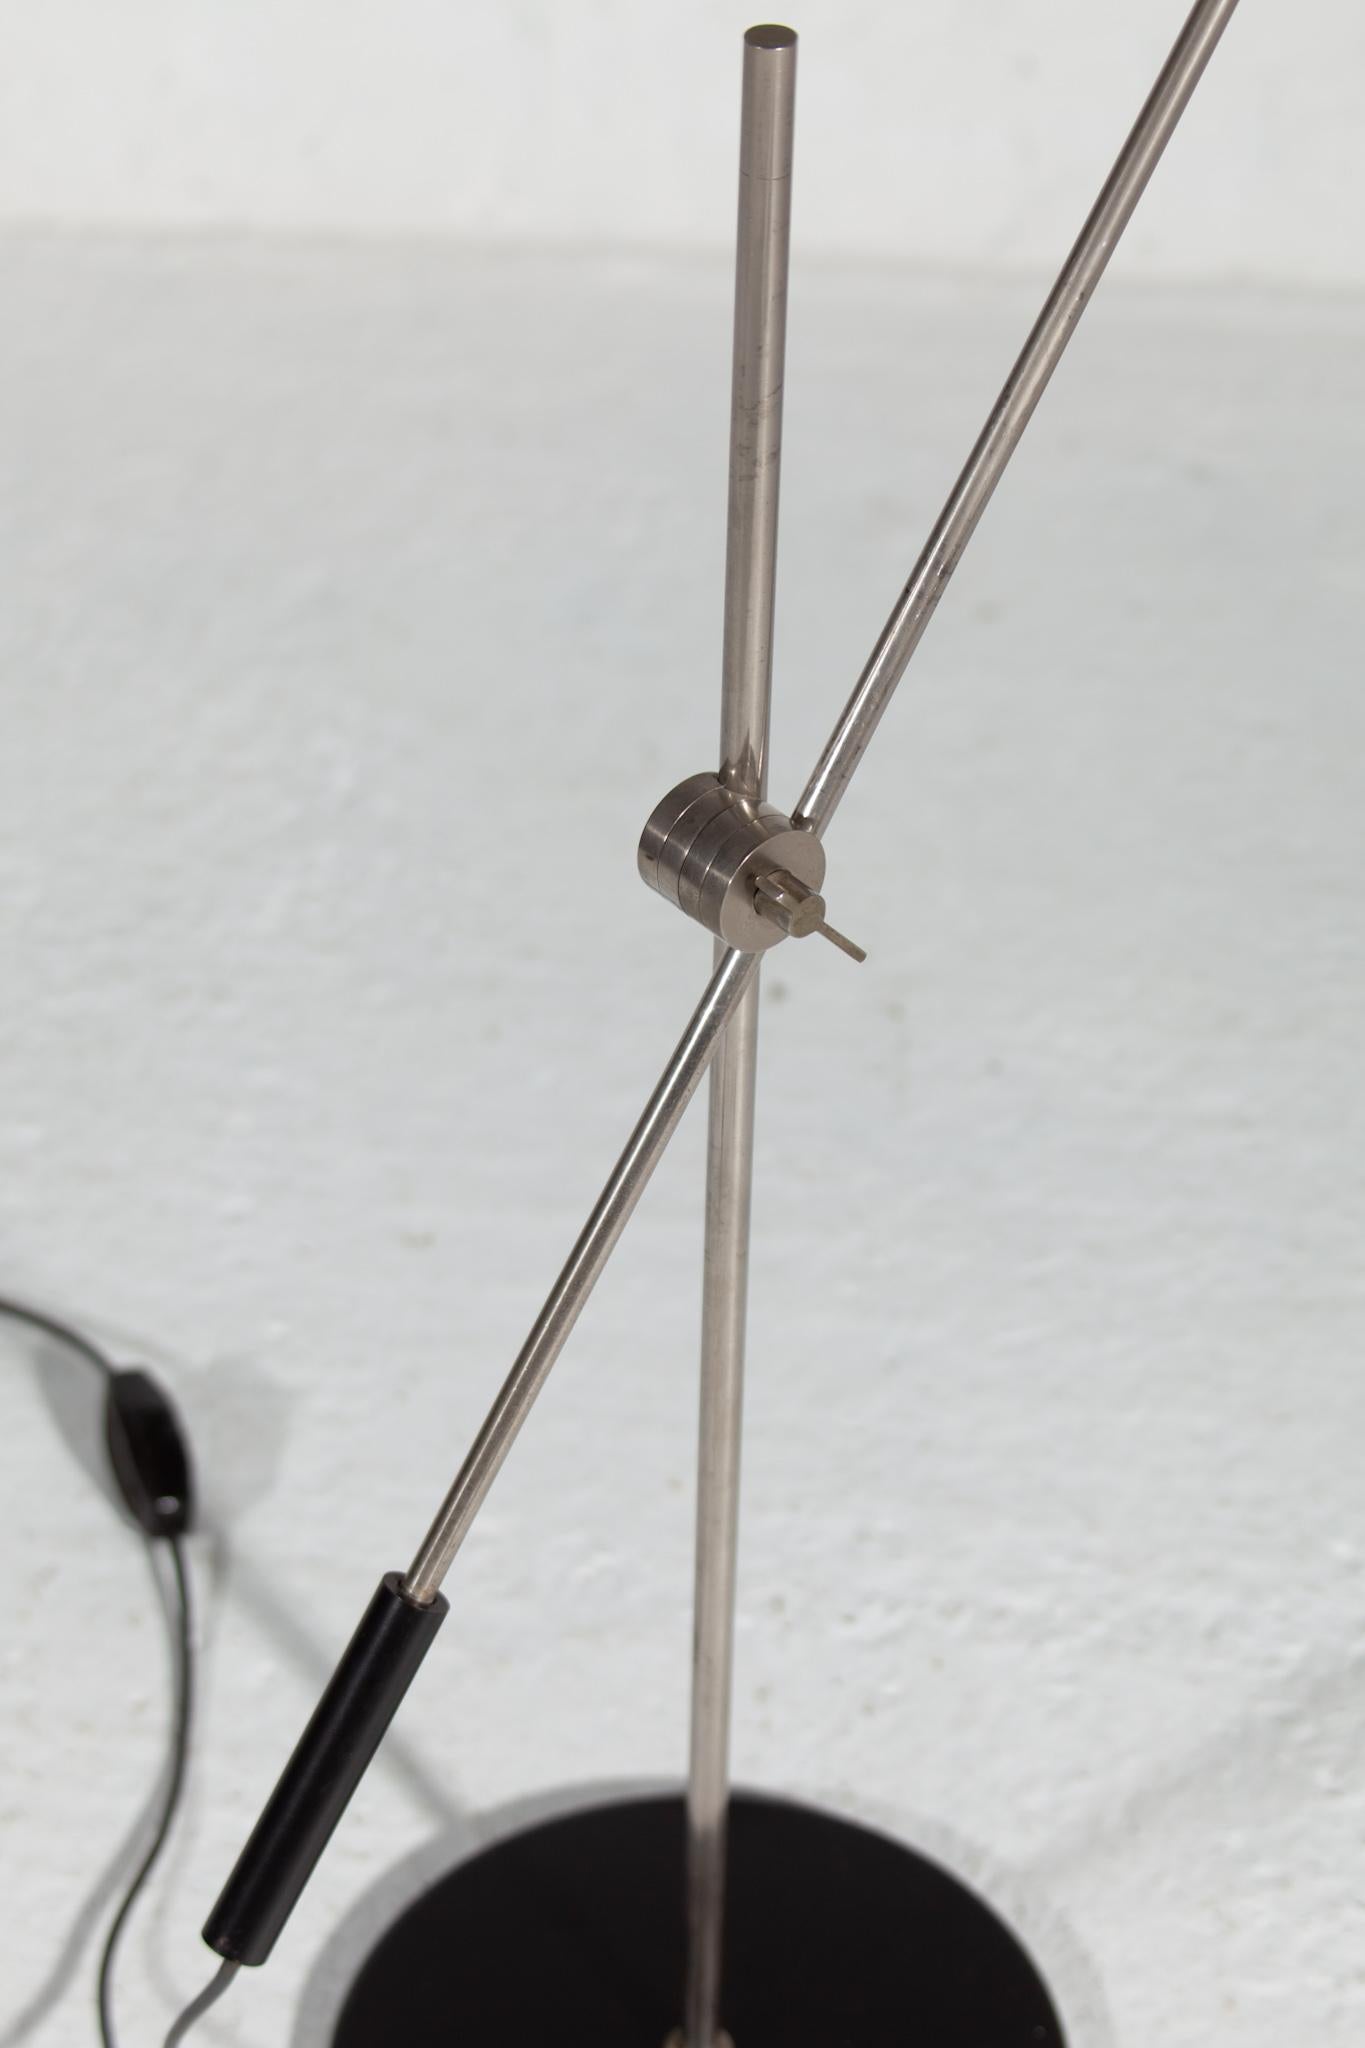 Metal Adjustable Floorlamp Model ST416 by H. Fillekes for Artiforte, Dutch Original